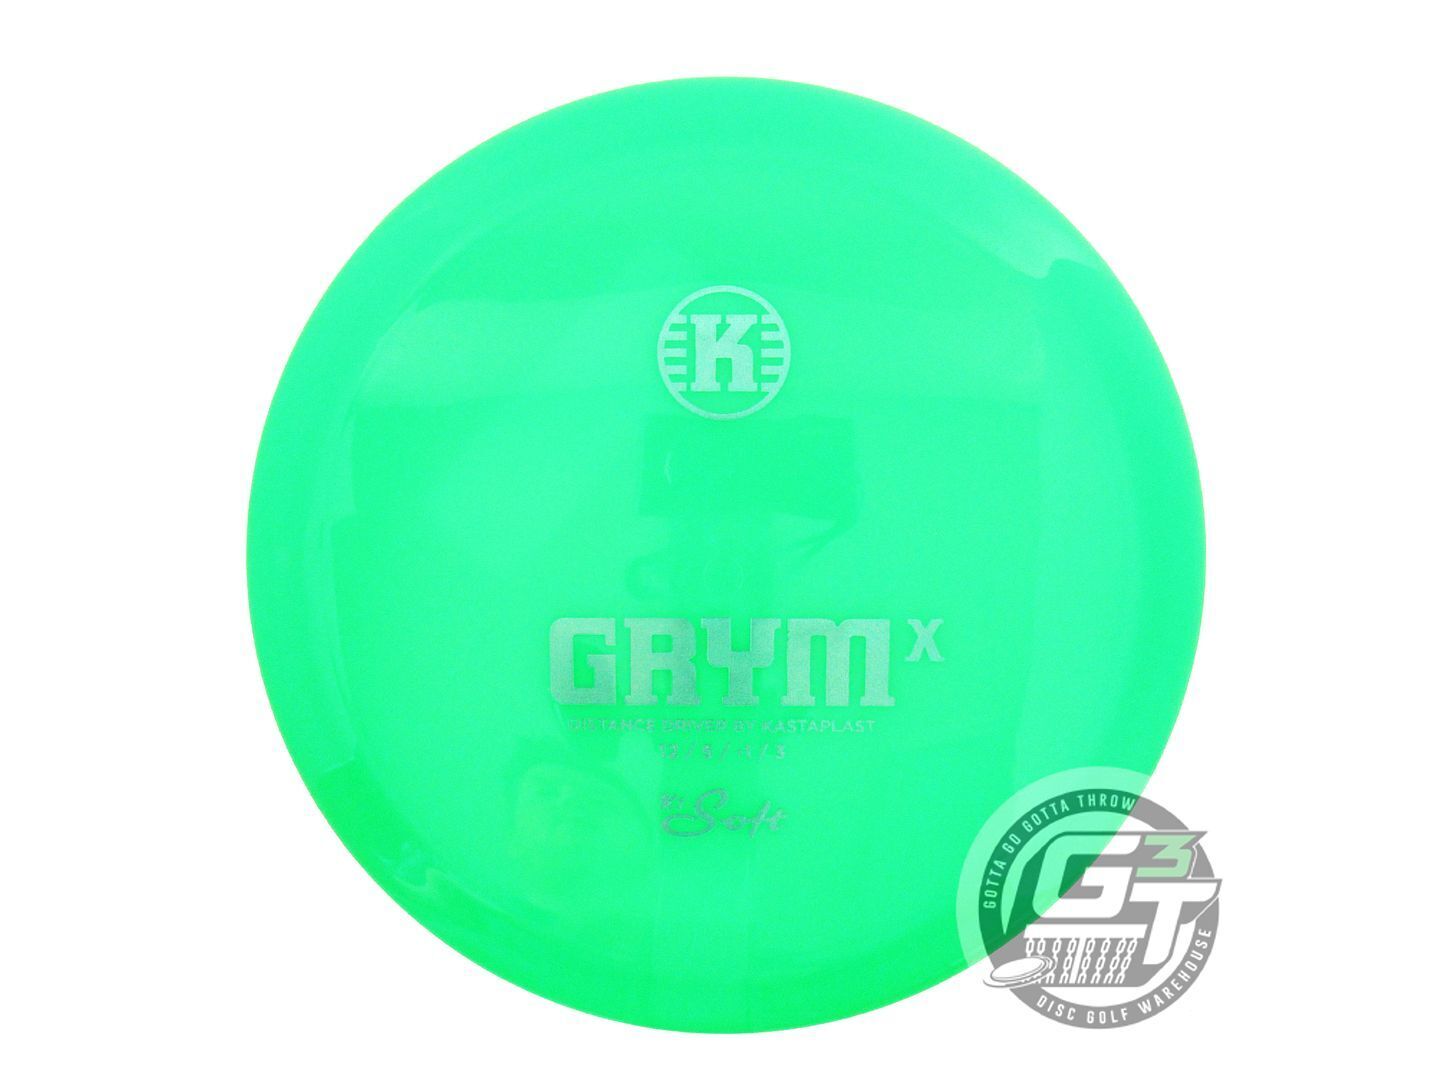 Kastaplast K1 Soft Grym X Distance Driver Golf Disc (Individually Listed)